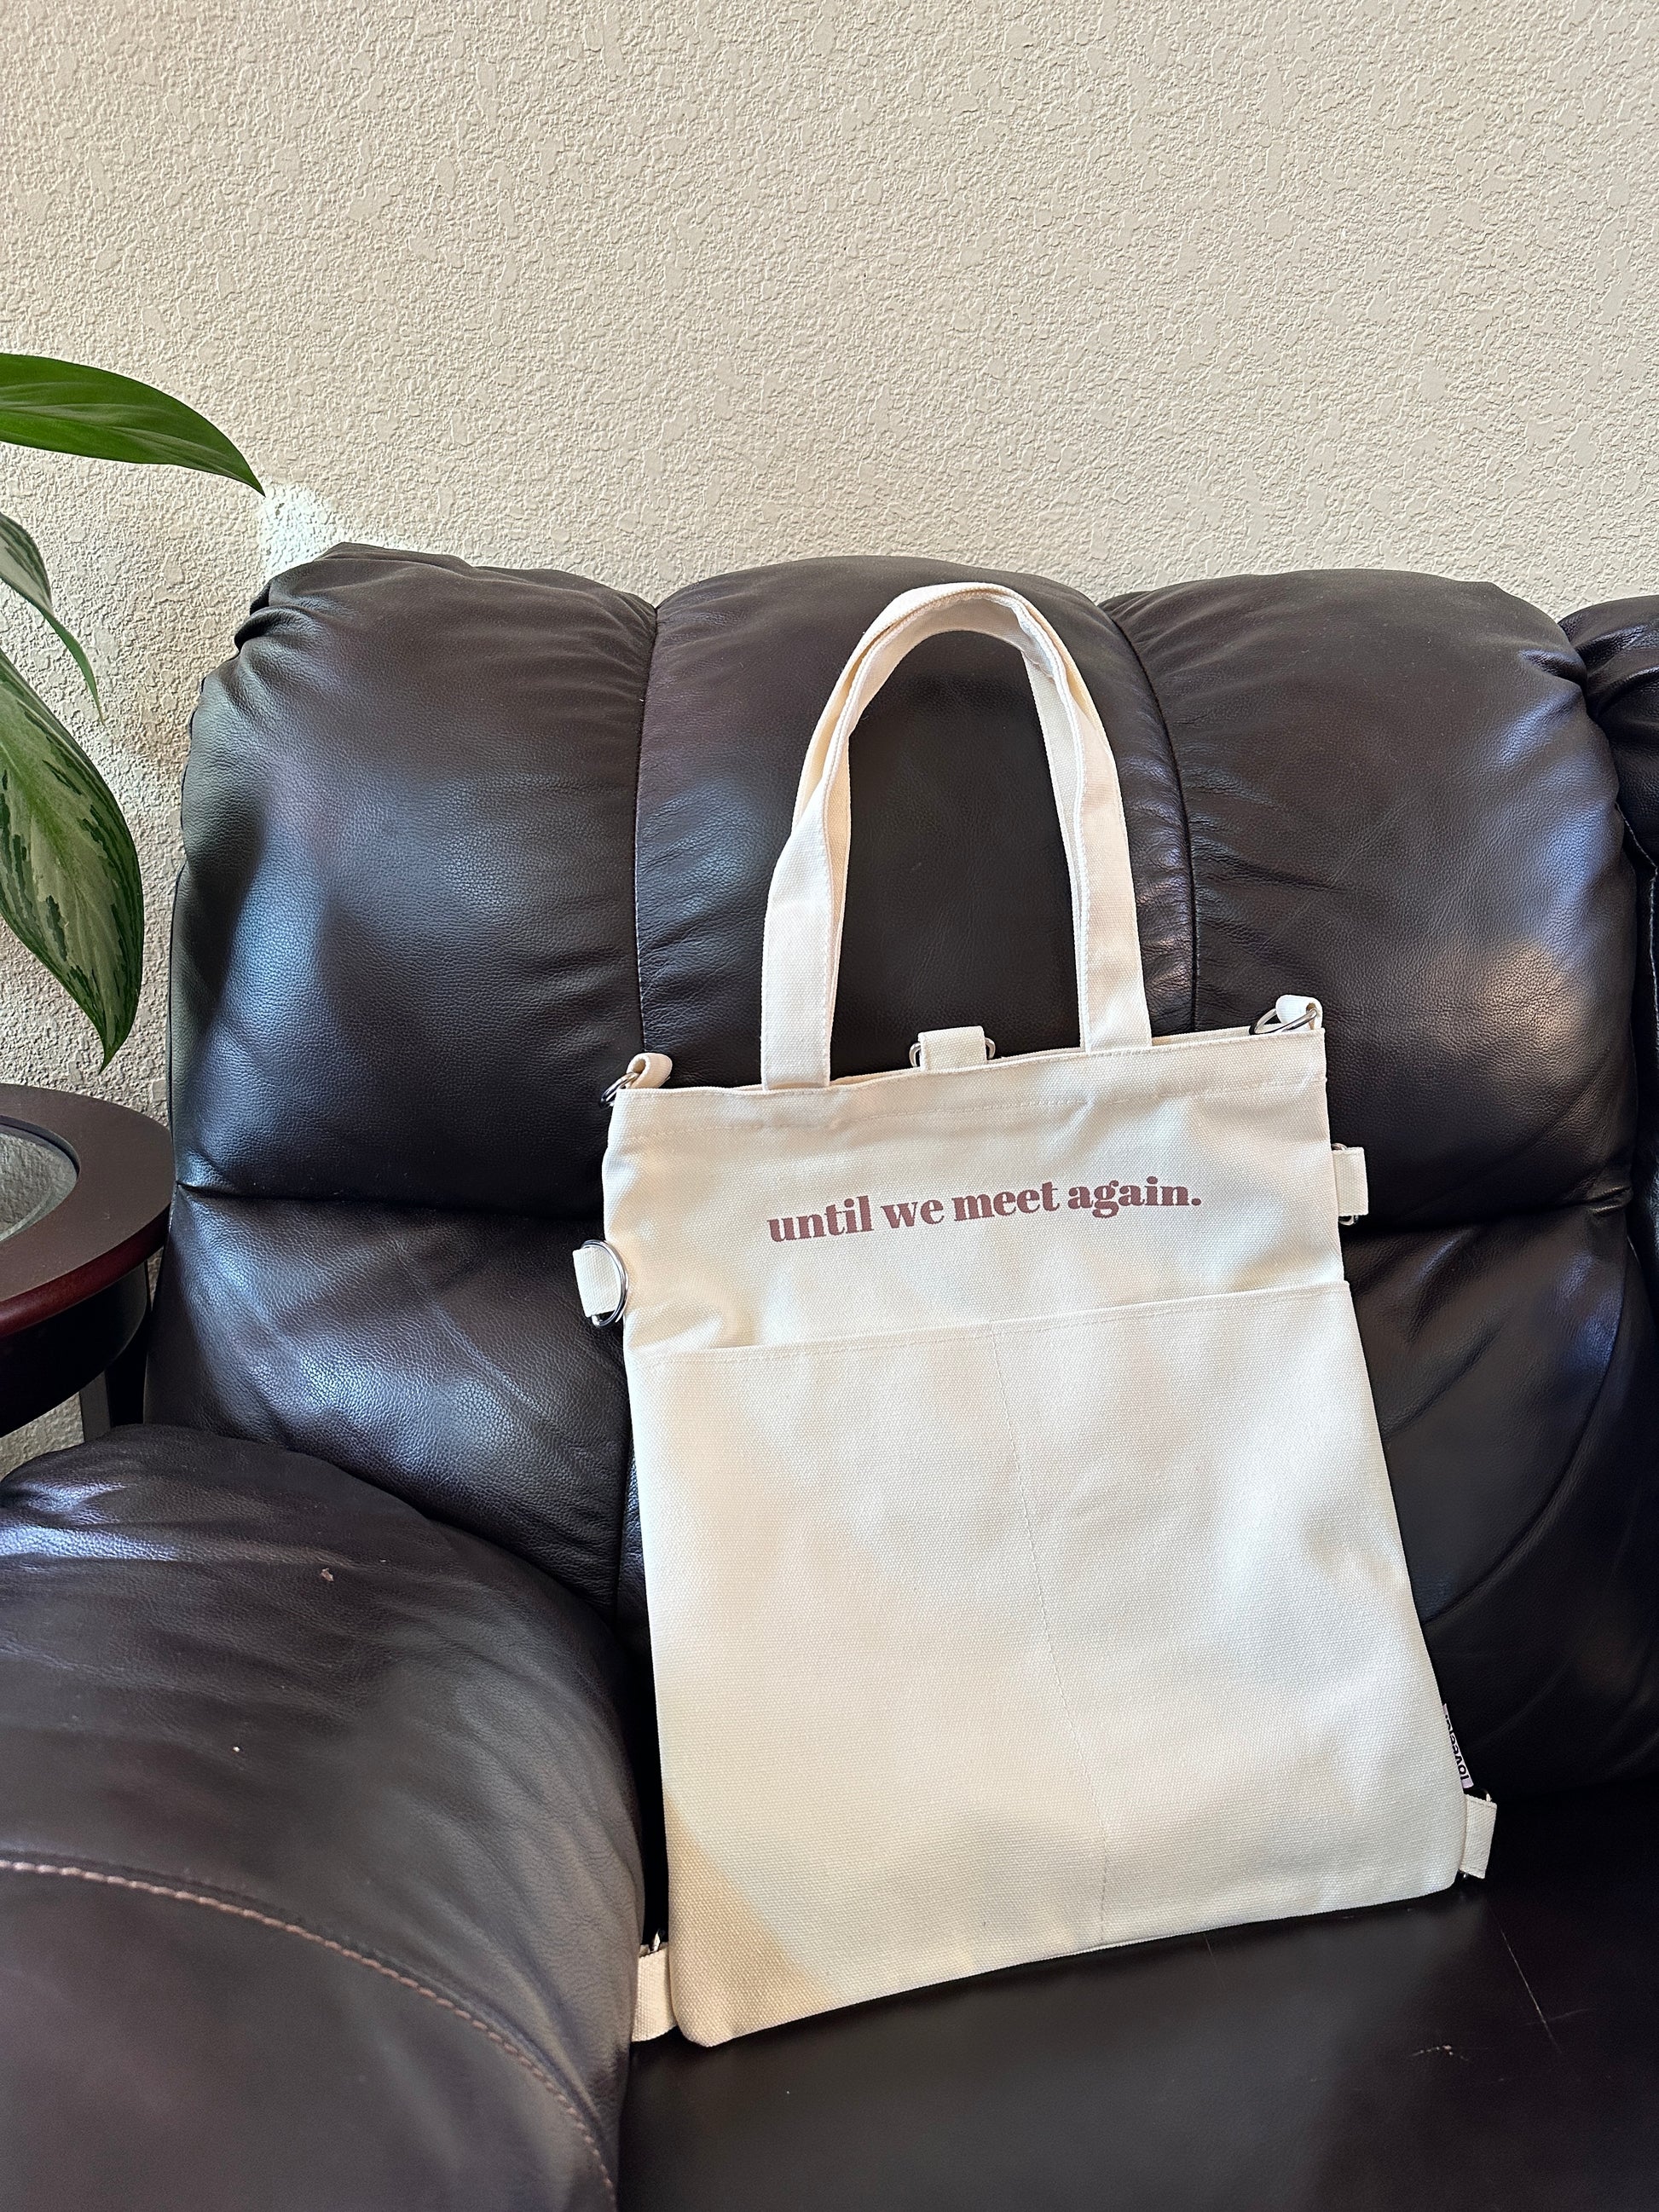 Minimalist Score 1.2 Design White Organic fashion tote bag